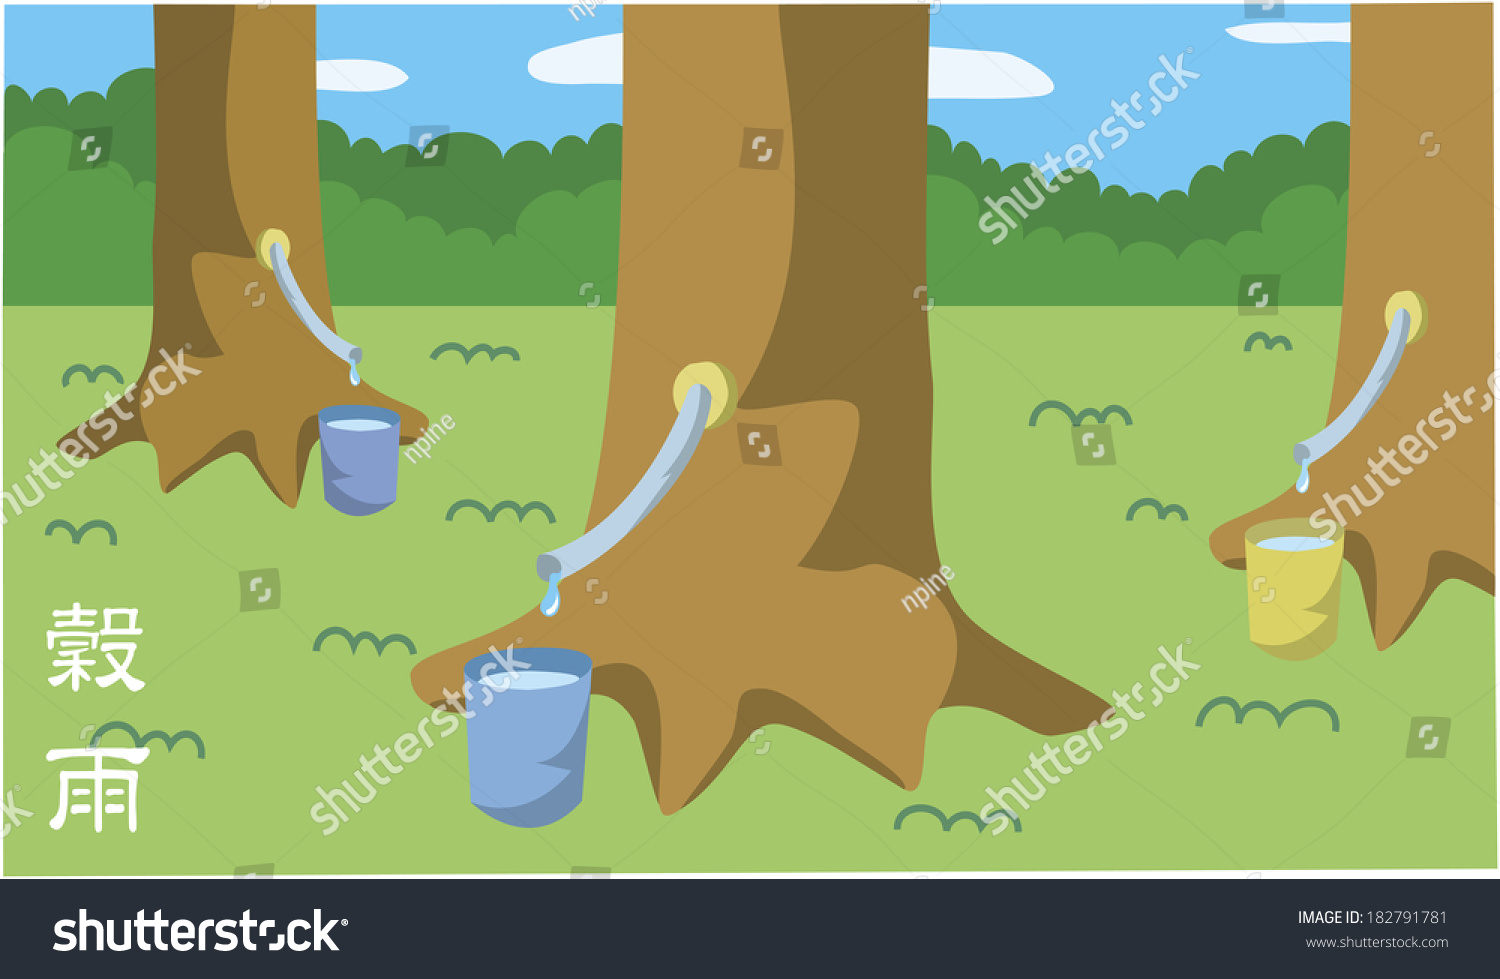 Gathering Sap Trees Stock Illustration 182791781 - Shutterstock